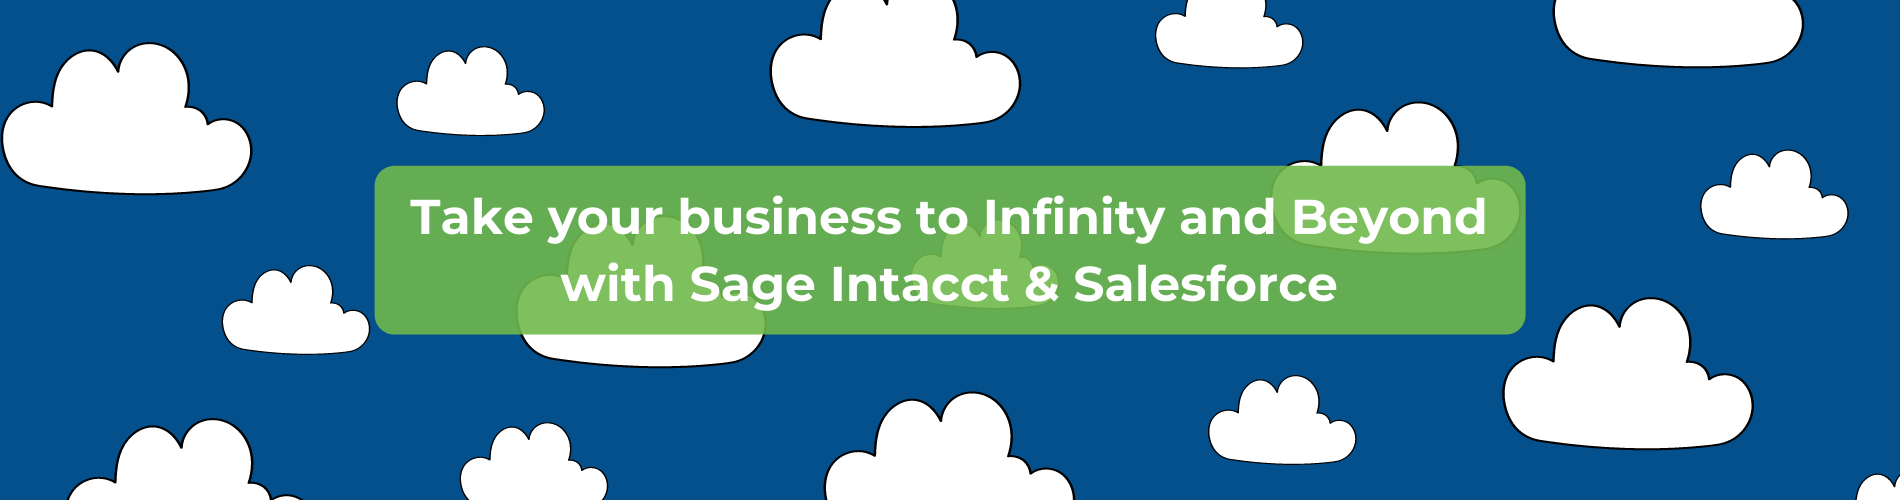 blog infinity beyond sage intacct salesforce header